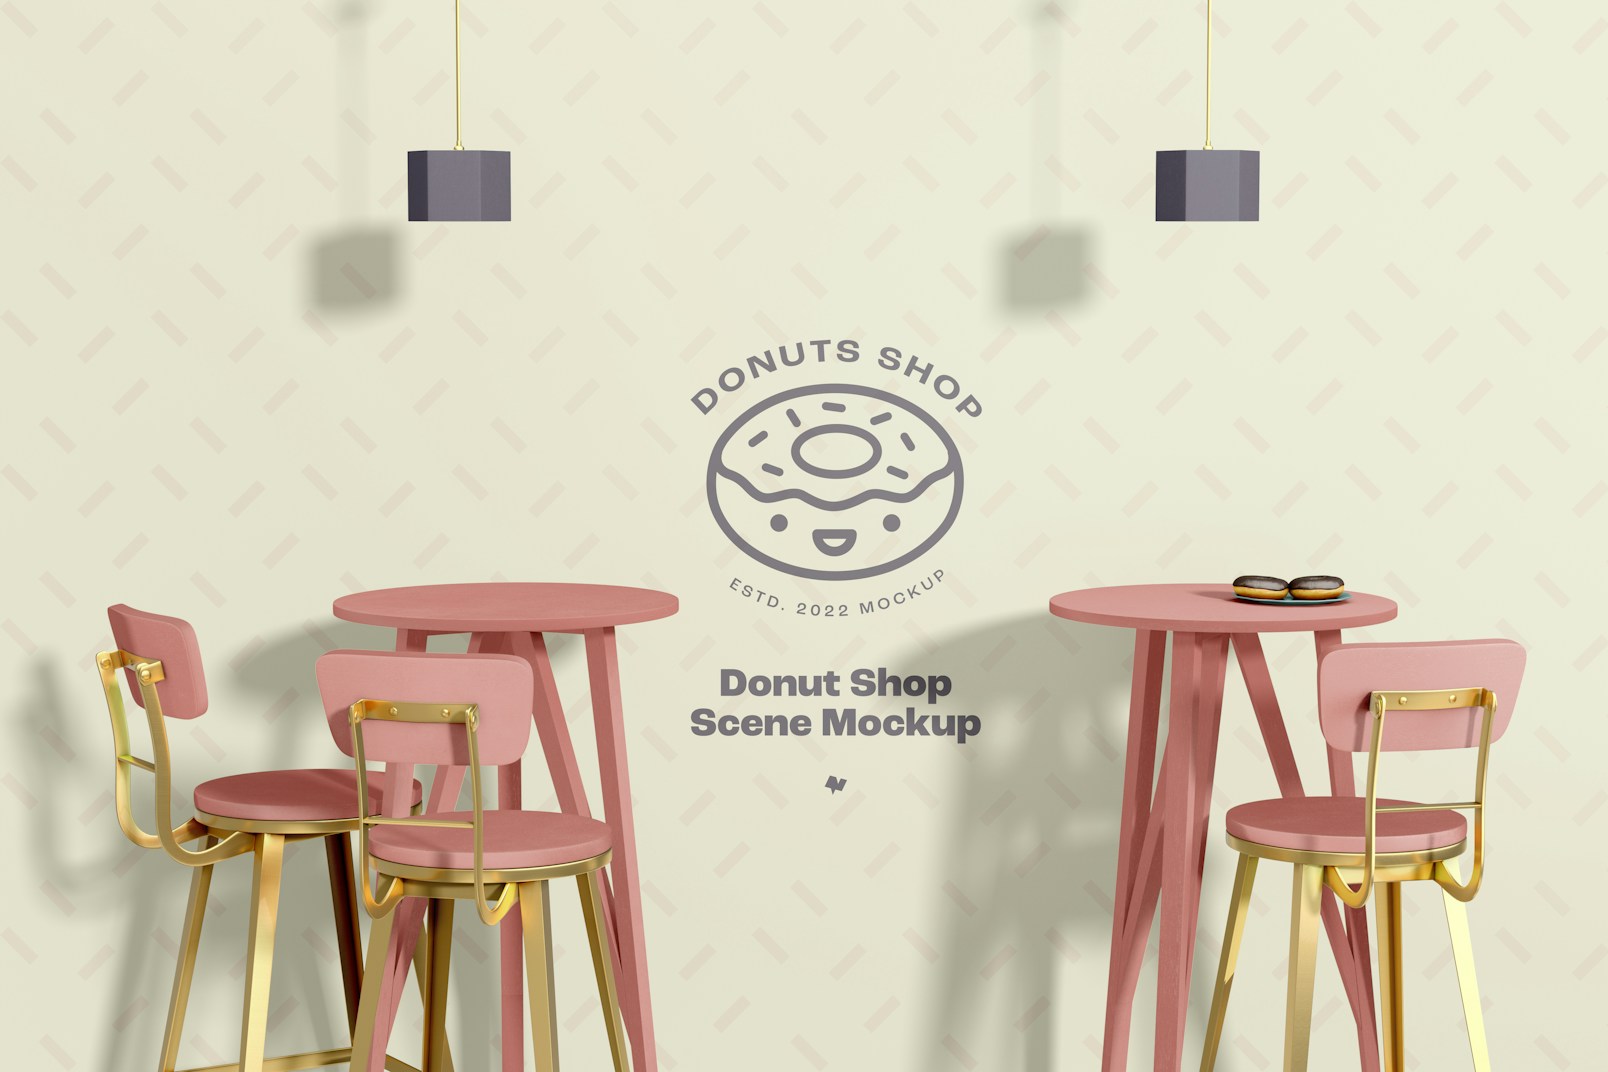 Donut Shop Scene Mockup, with Lamps